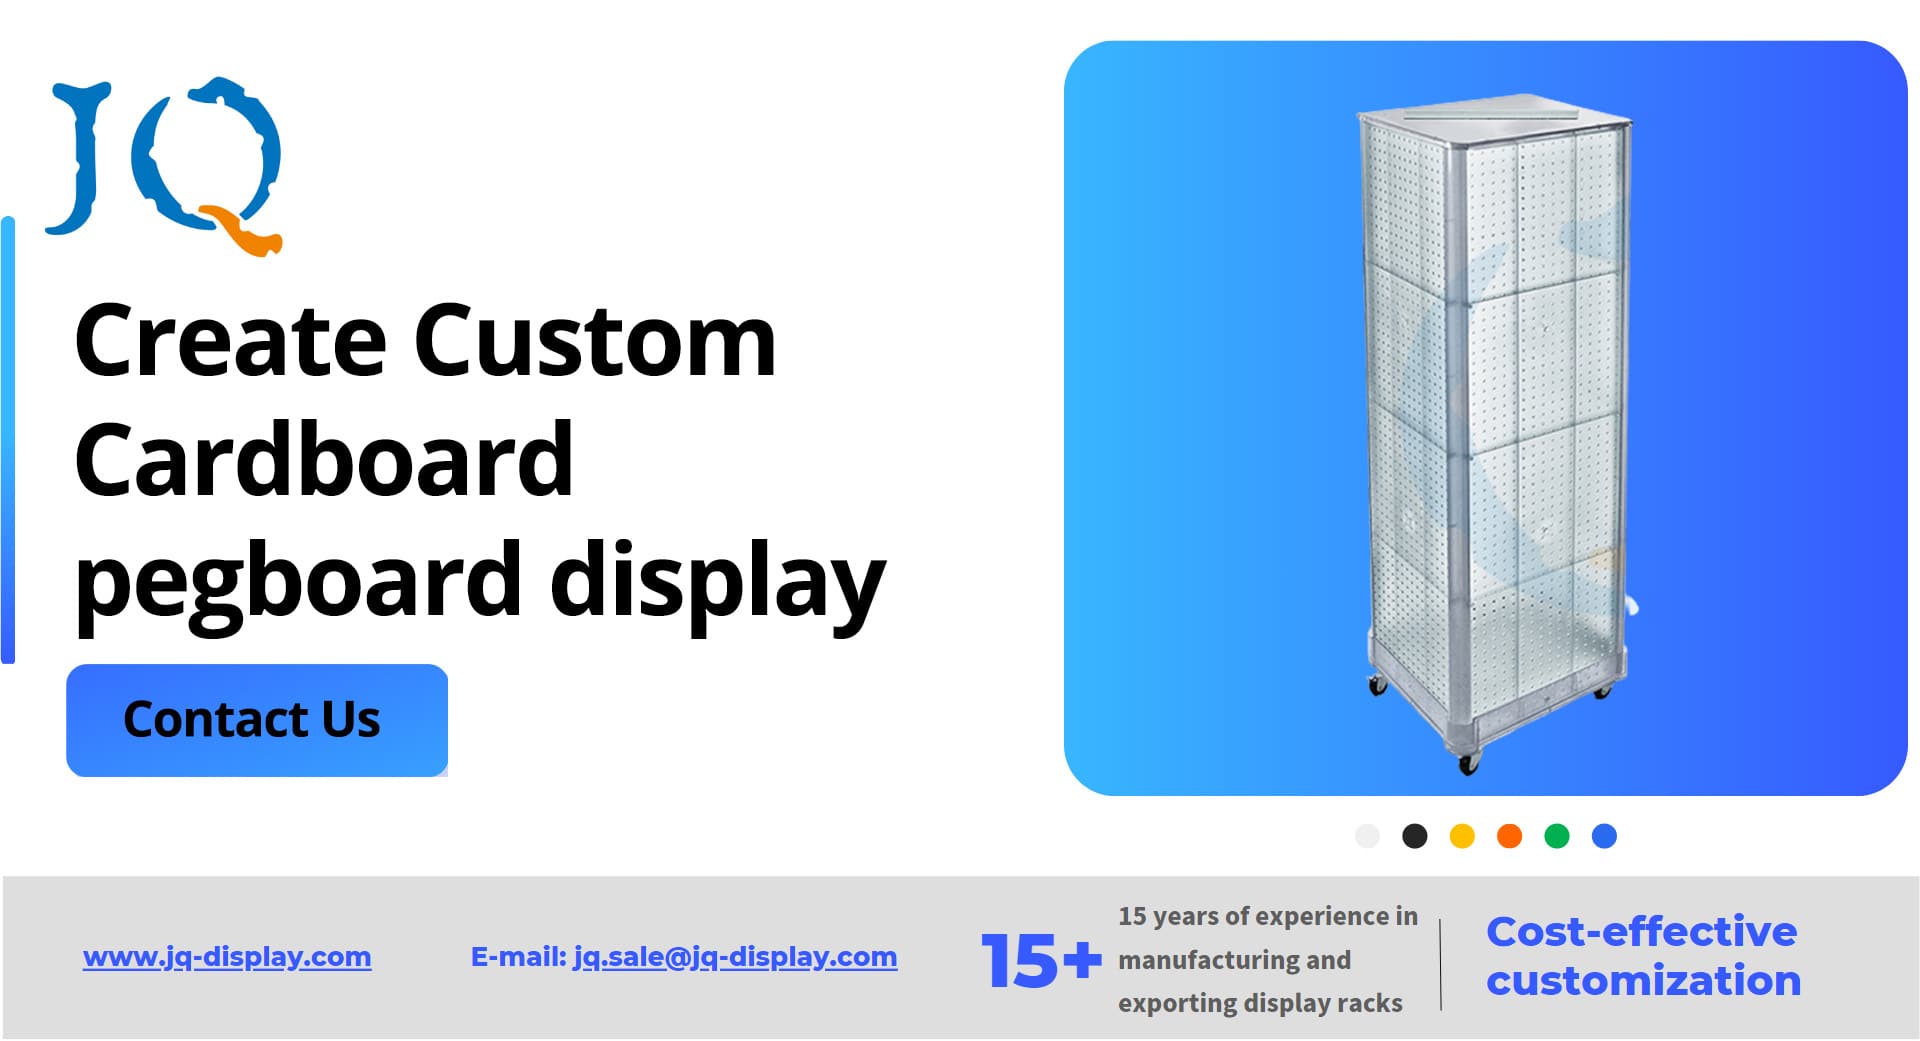 Erstellt Custom Cardboard Pegboard Display